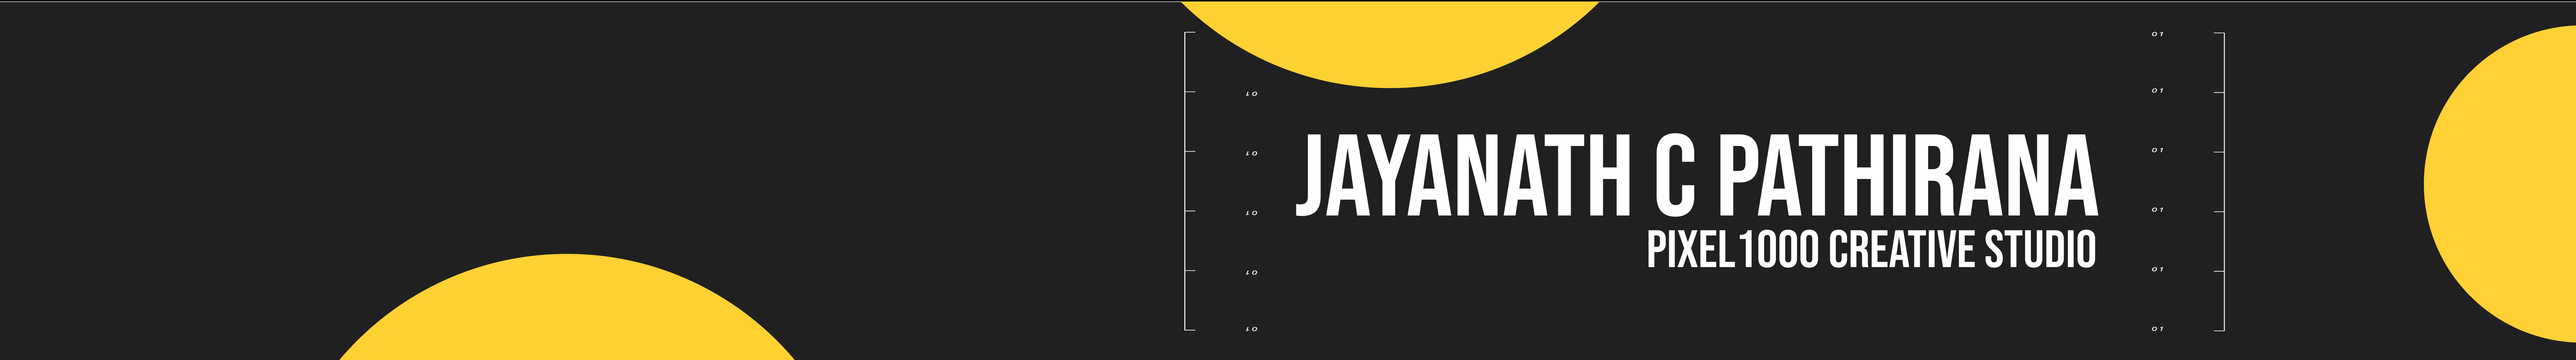 Jayanath C Pathirana's profile banner